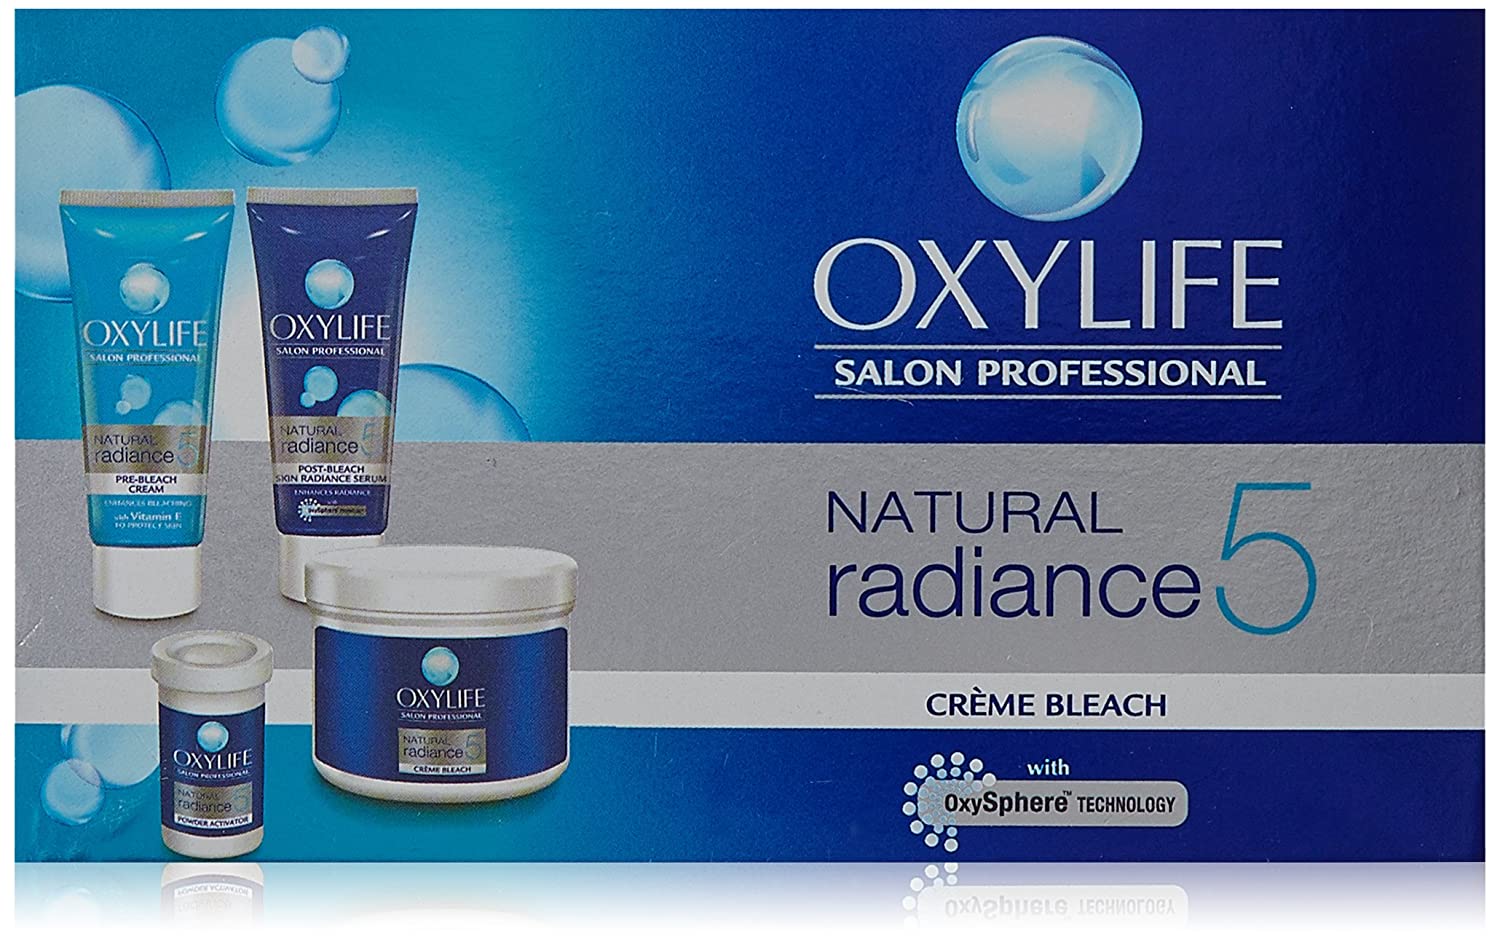 Oxylife Cream Bleach"